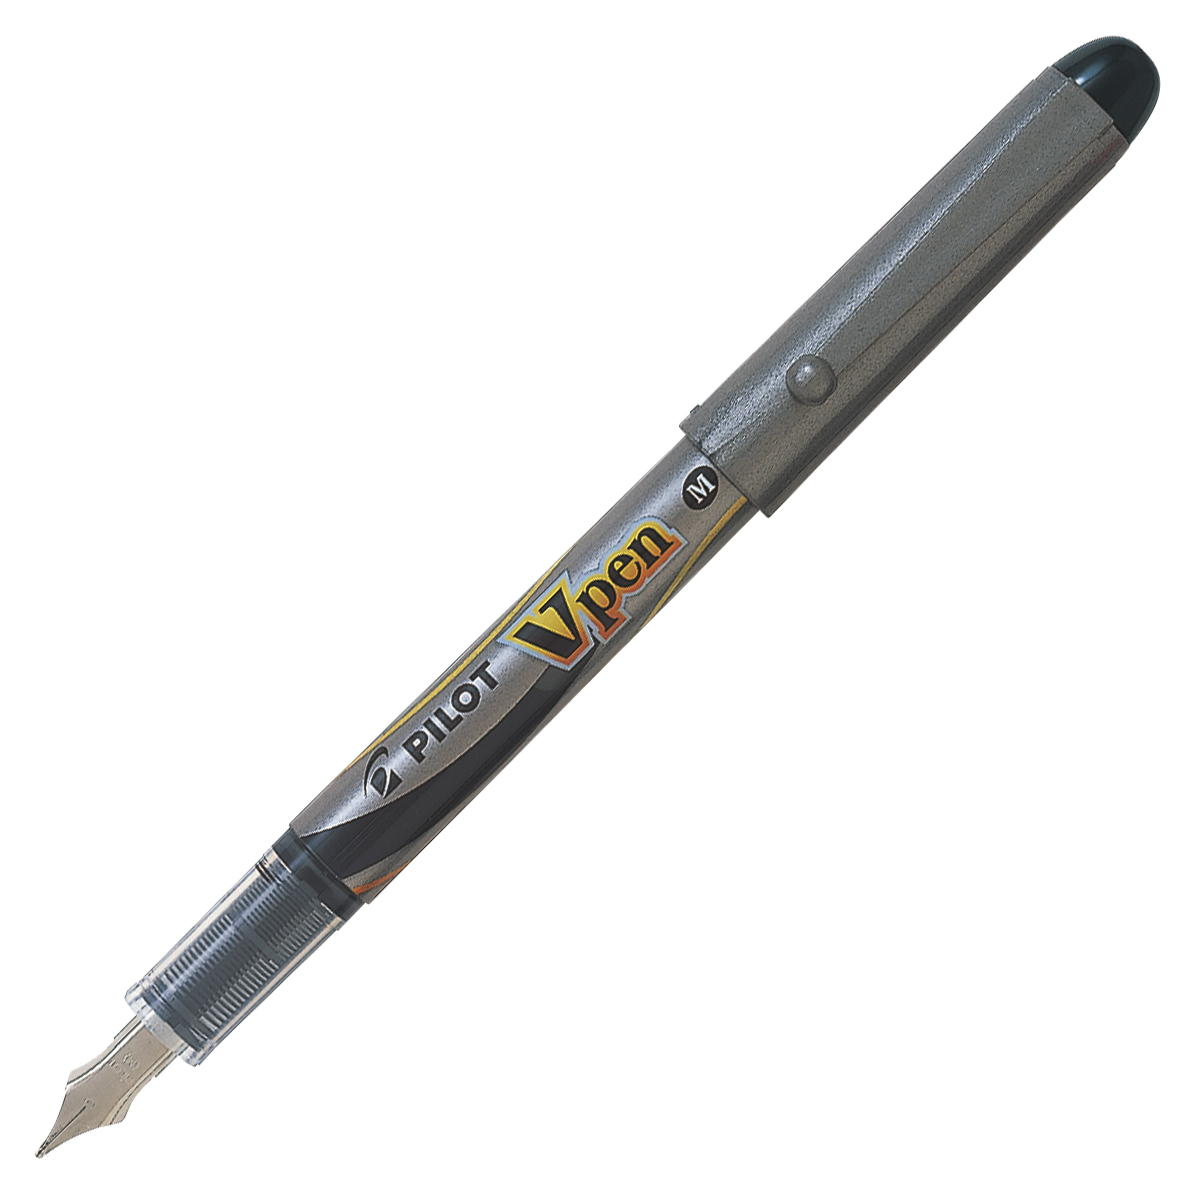 V-Pen in the group Pens / Office / Office Pens at Pen Store (109316_r)